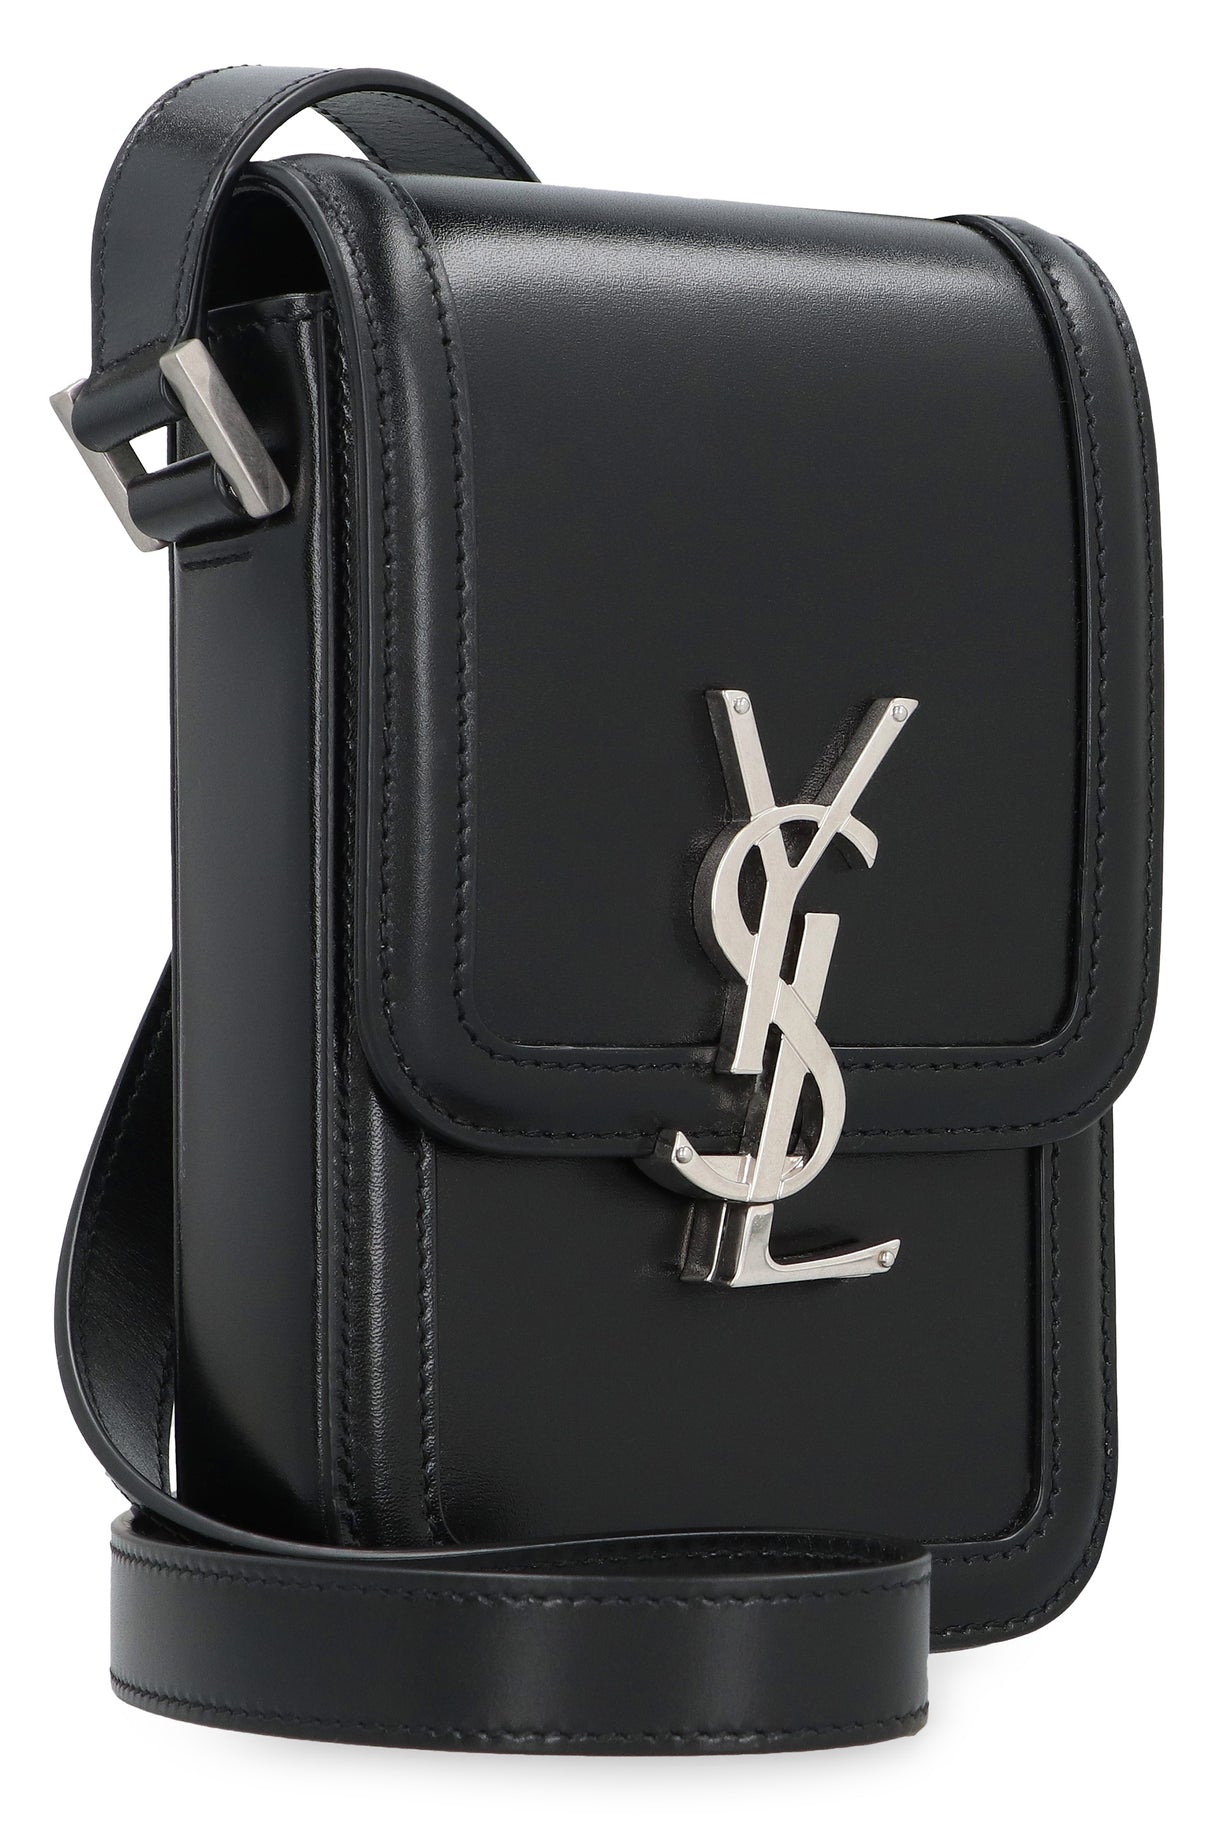 SAINT LAURENT Elegant Mini Black Leather Crossbody Bag for Men with Adjustable Strap and Silver-Tone Hardware, 11x18x5 cm